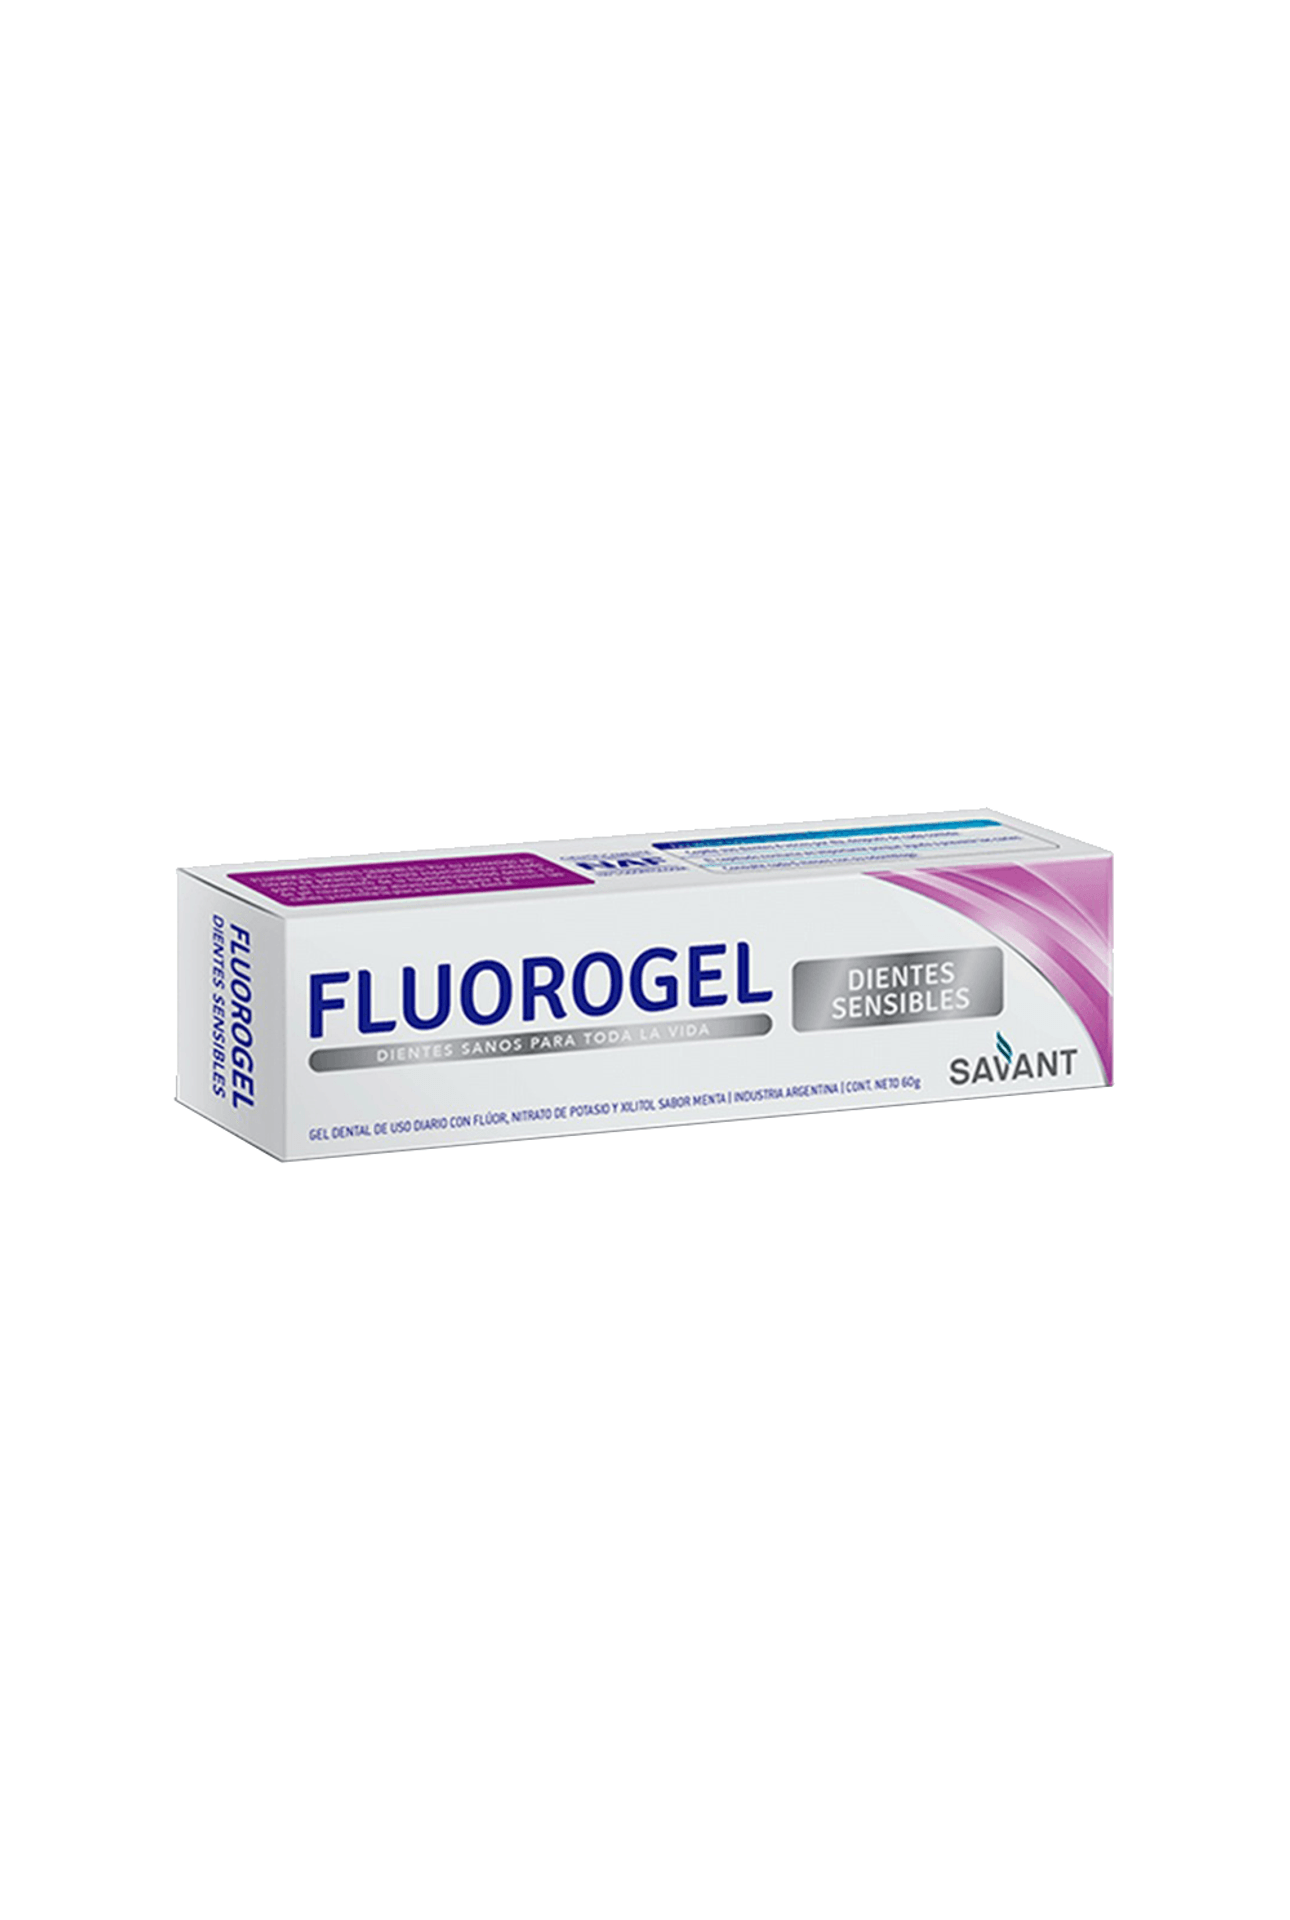 Fluorogel-Dientes Sensibles Gel Dental Sabor Menta x 60 gr-7794066000625